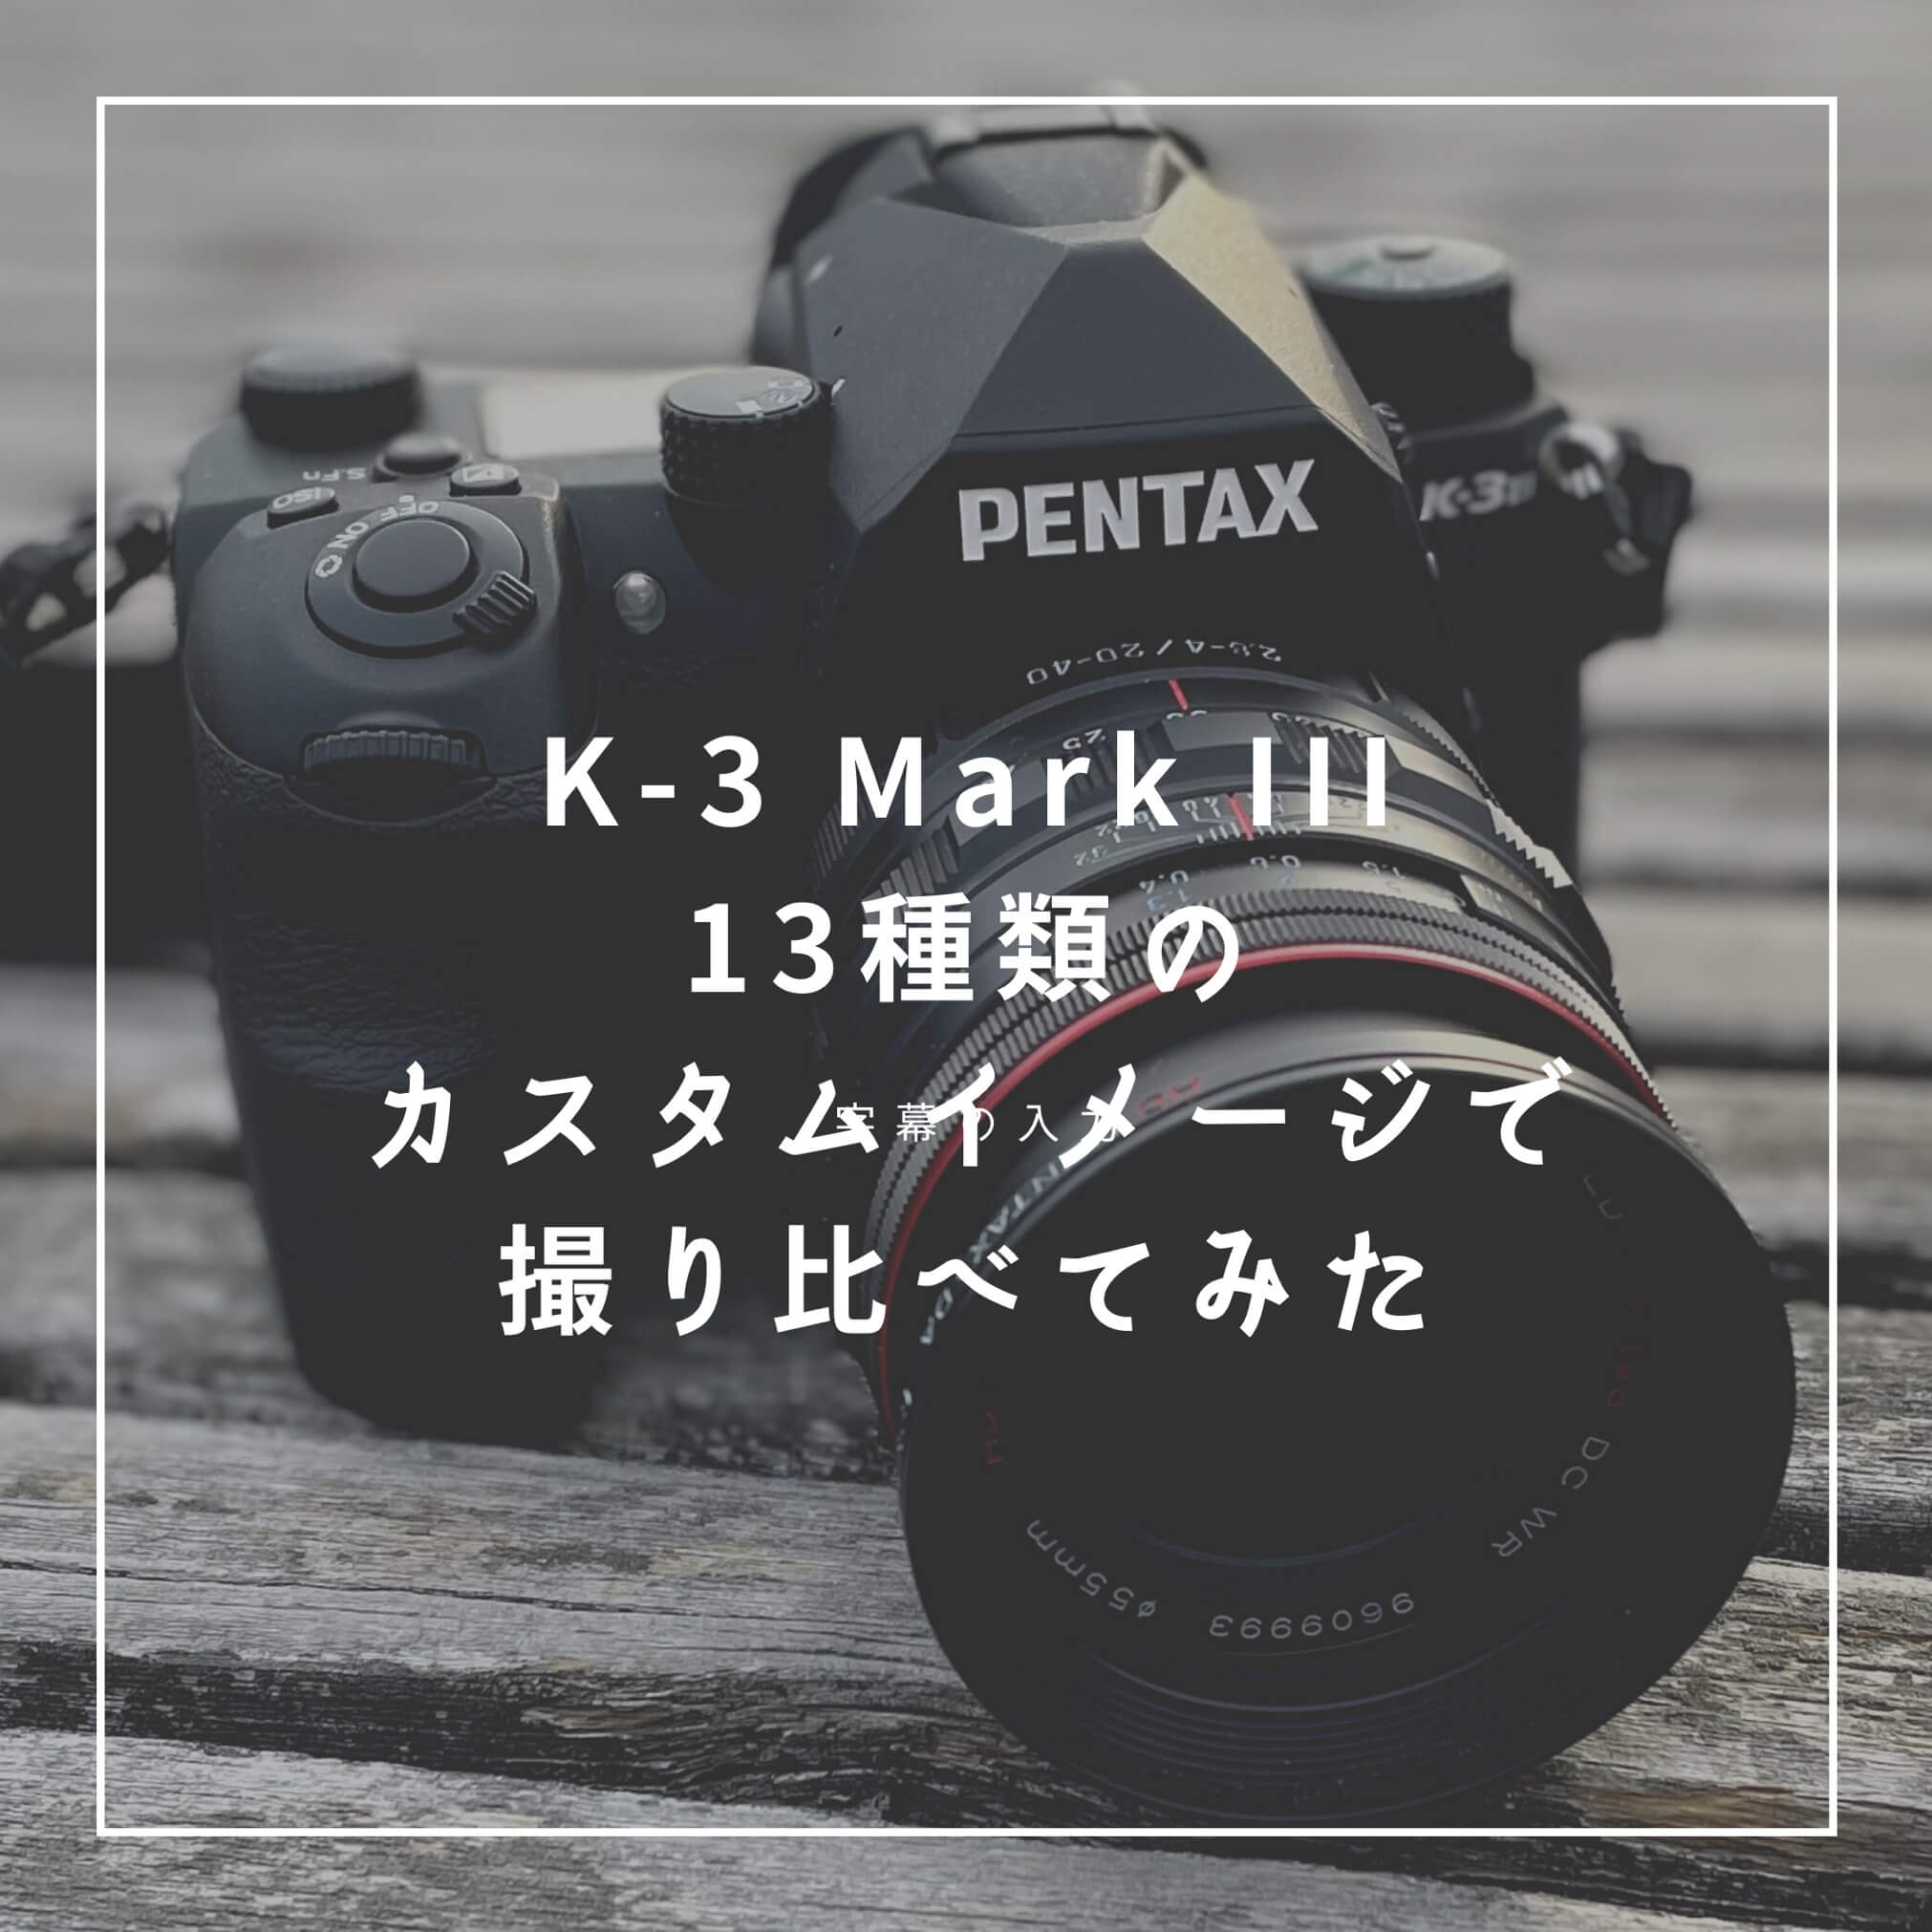 K-3 Mark IIIにプリセットされた13種類のPENTAXカスタムイメージを撮り